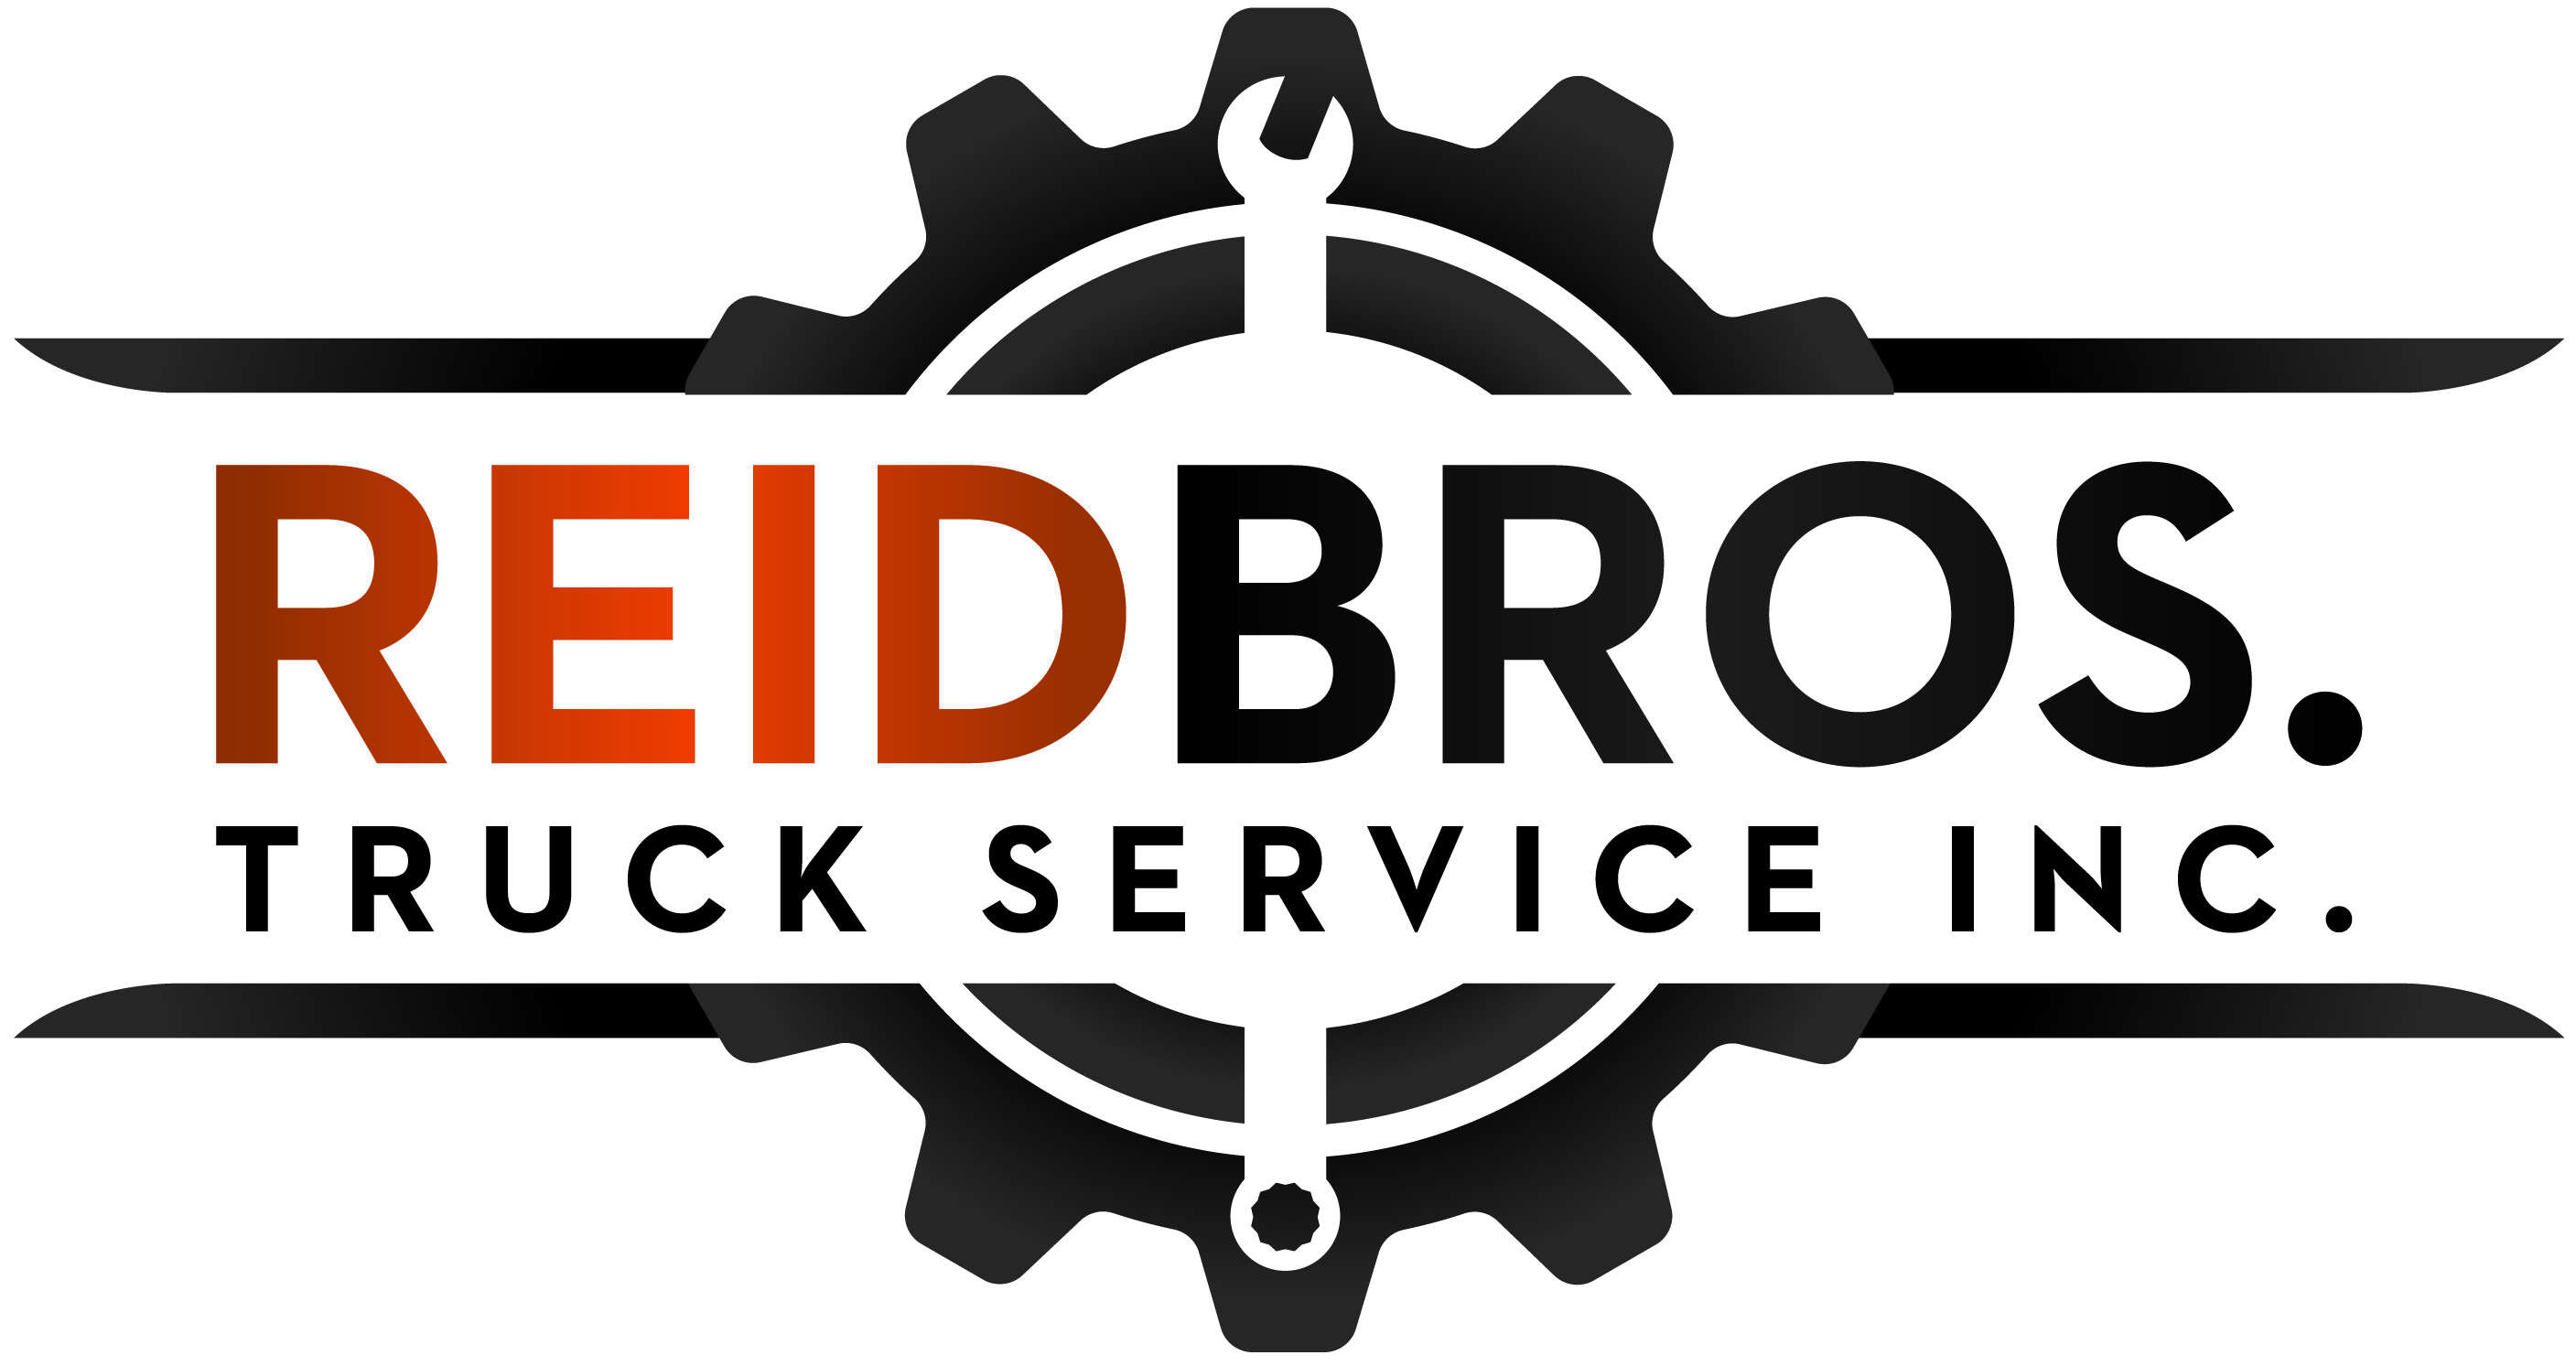 Reid Brothers Truck Service Inc.